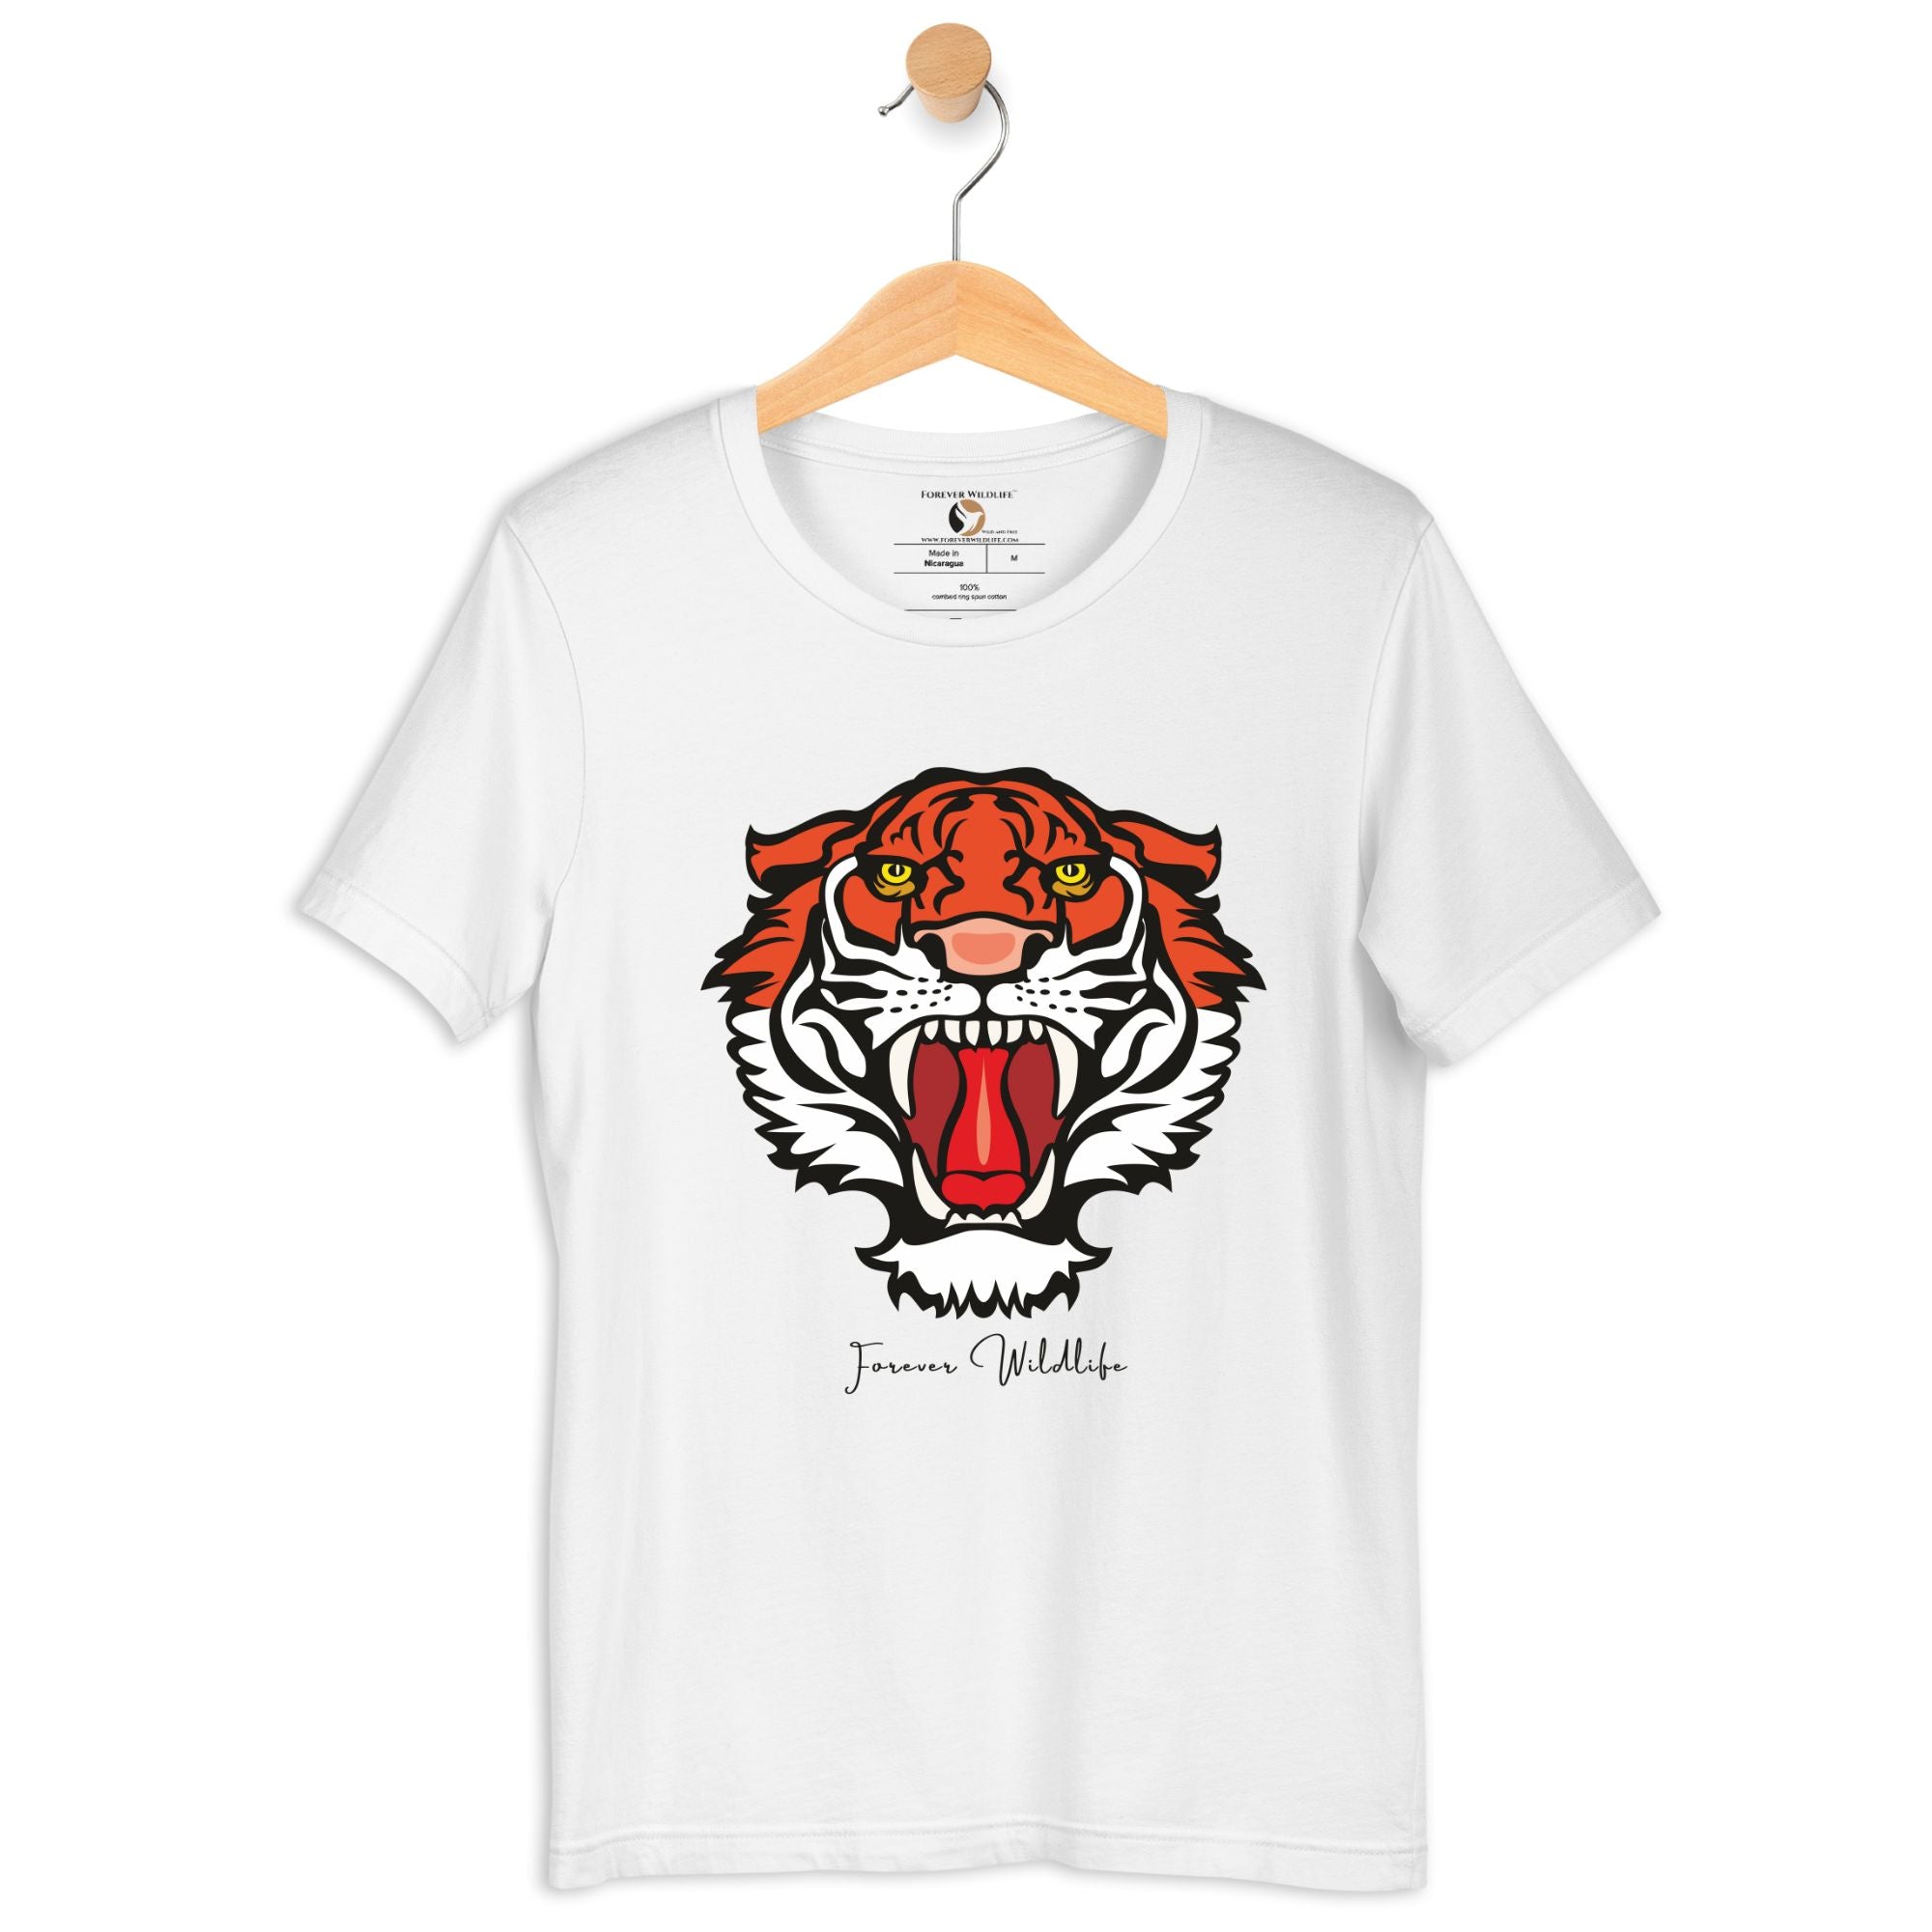 Tiger T-Shirt in White – Premium Wildlife T-Shirt Design, Wildlife T-Shirts & Clothing from Forever Wildlife